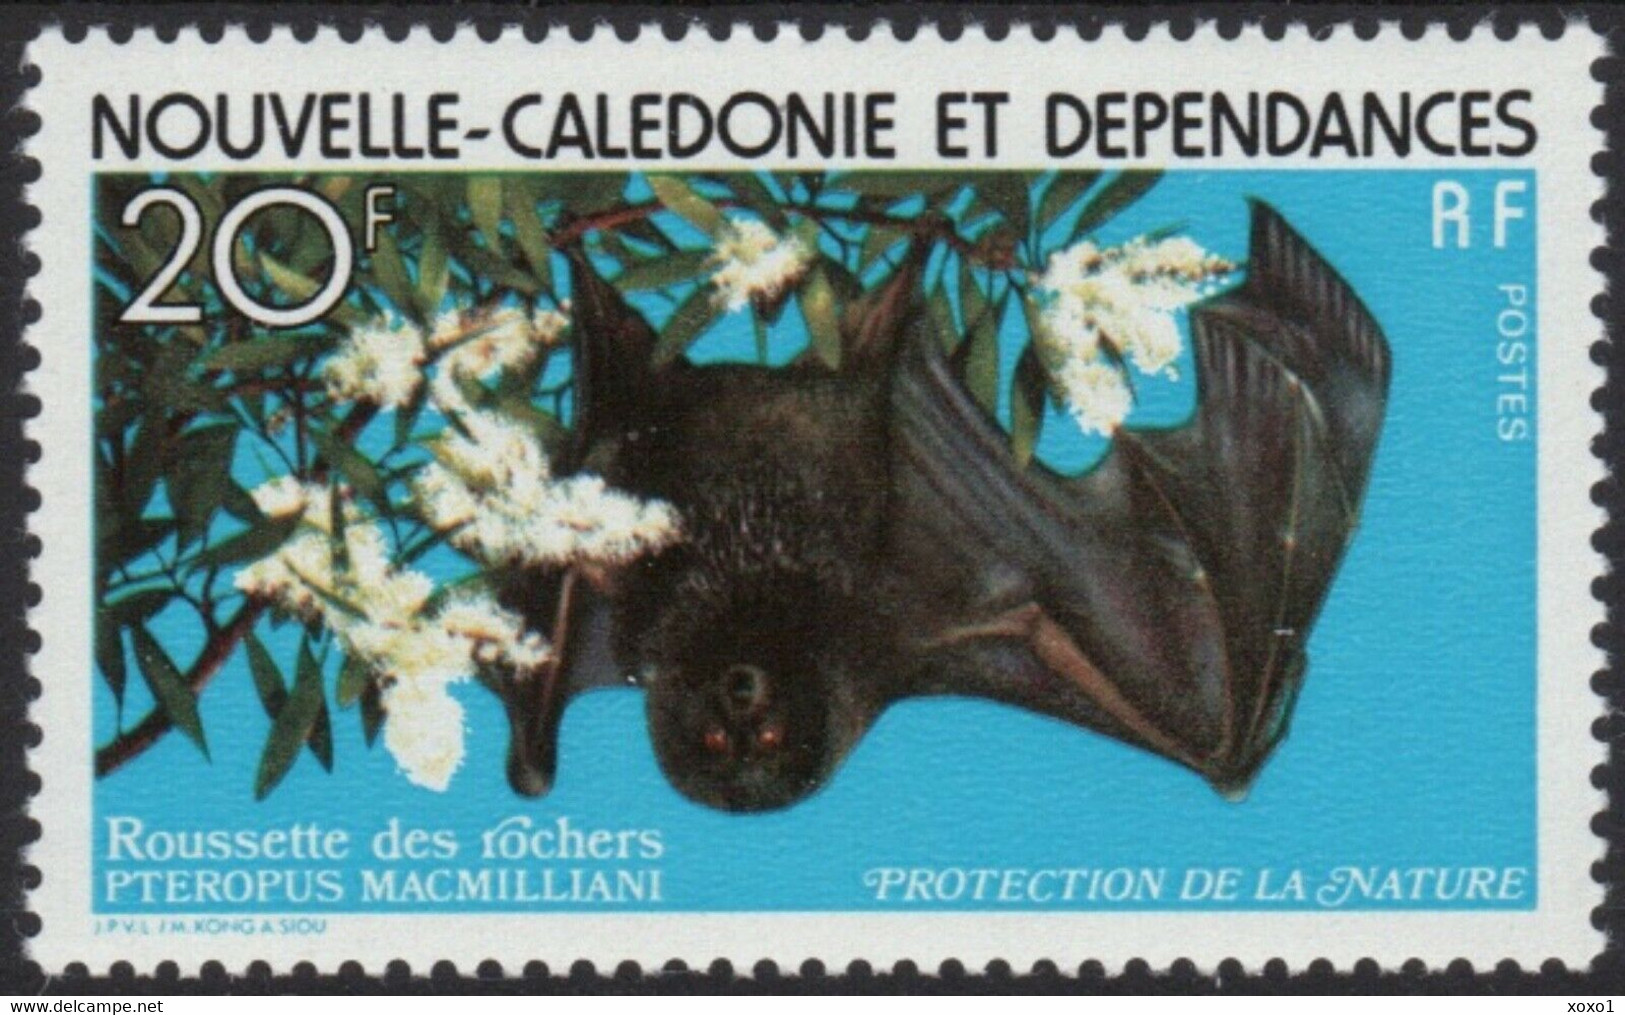 New Caledonia 1978 MiNr. 612 Neukaledonien Bats Flying Fox 1v MNH** 6,00 € - Chauve-souris